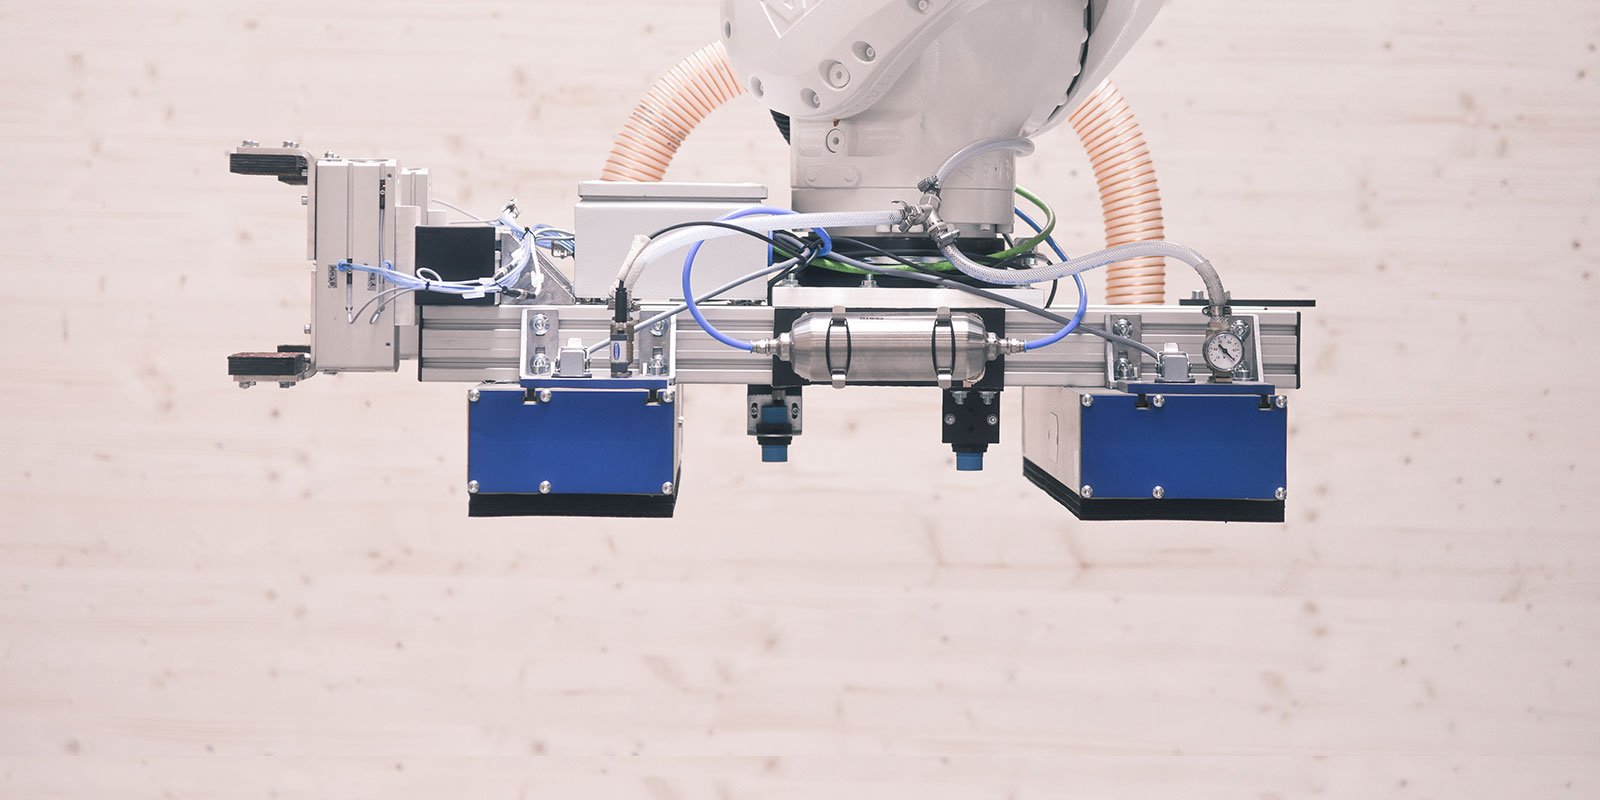 BEC ROBOTICS - KUKA - Produktionsautomatisierung - Industrierobotik - Mobile Robotik - Effizienz - Produktivität - Materialtransport - Prozessoptimierung - Mitarbeiterförderung